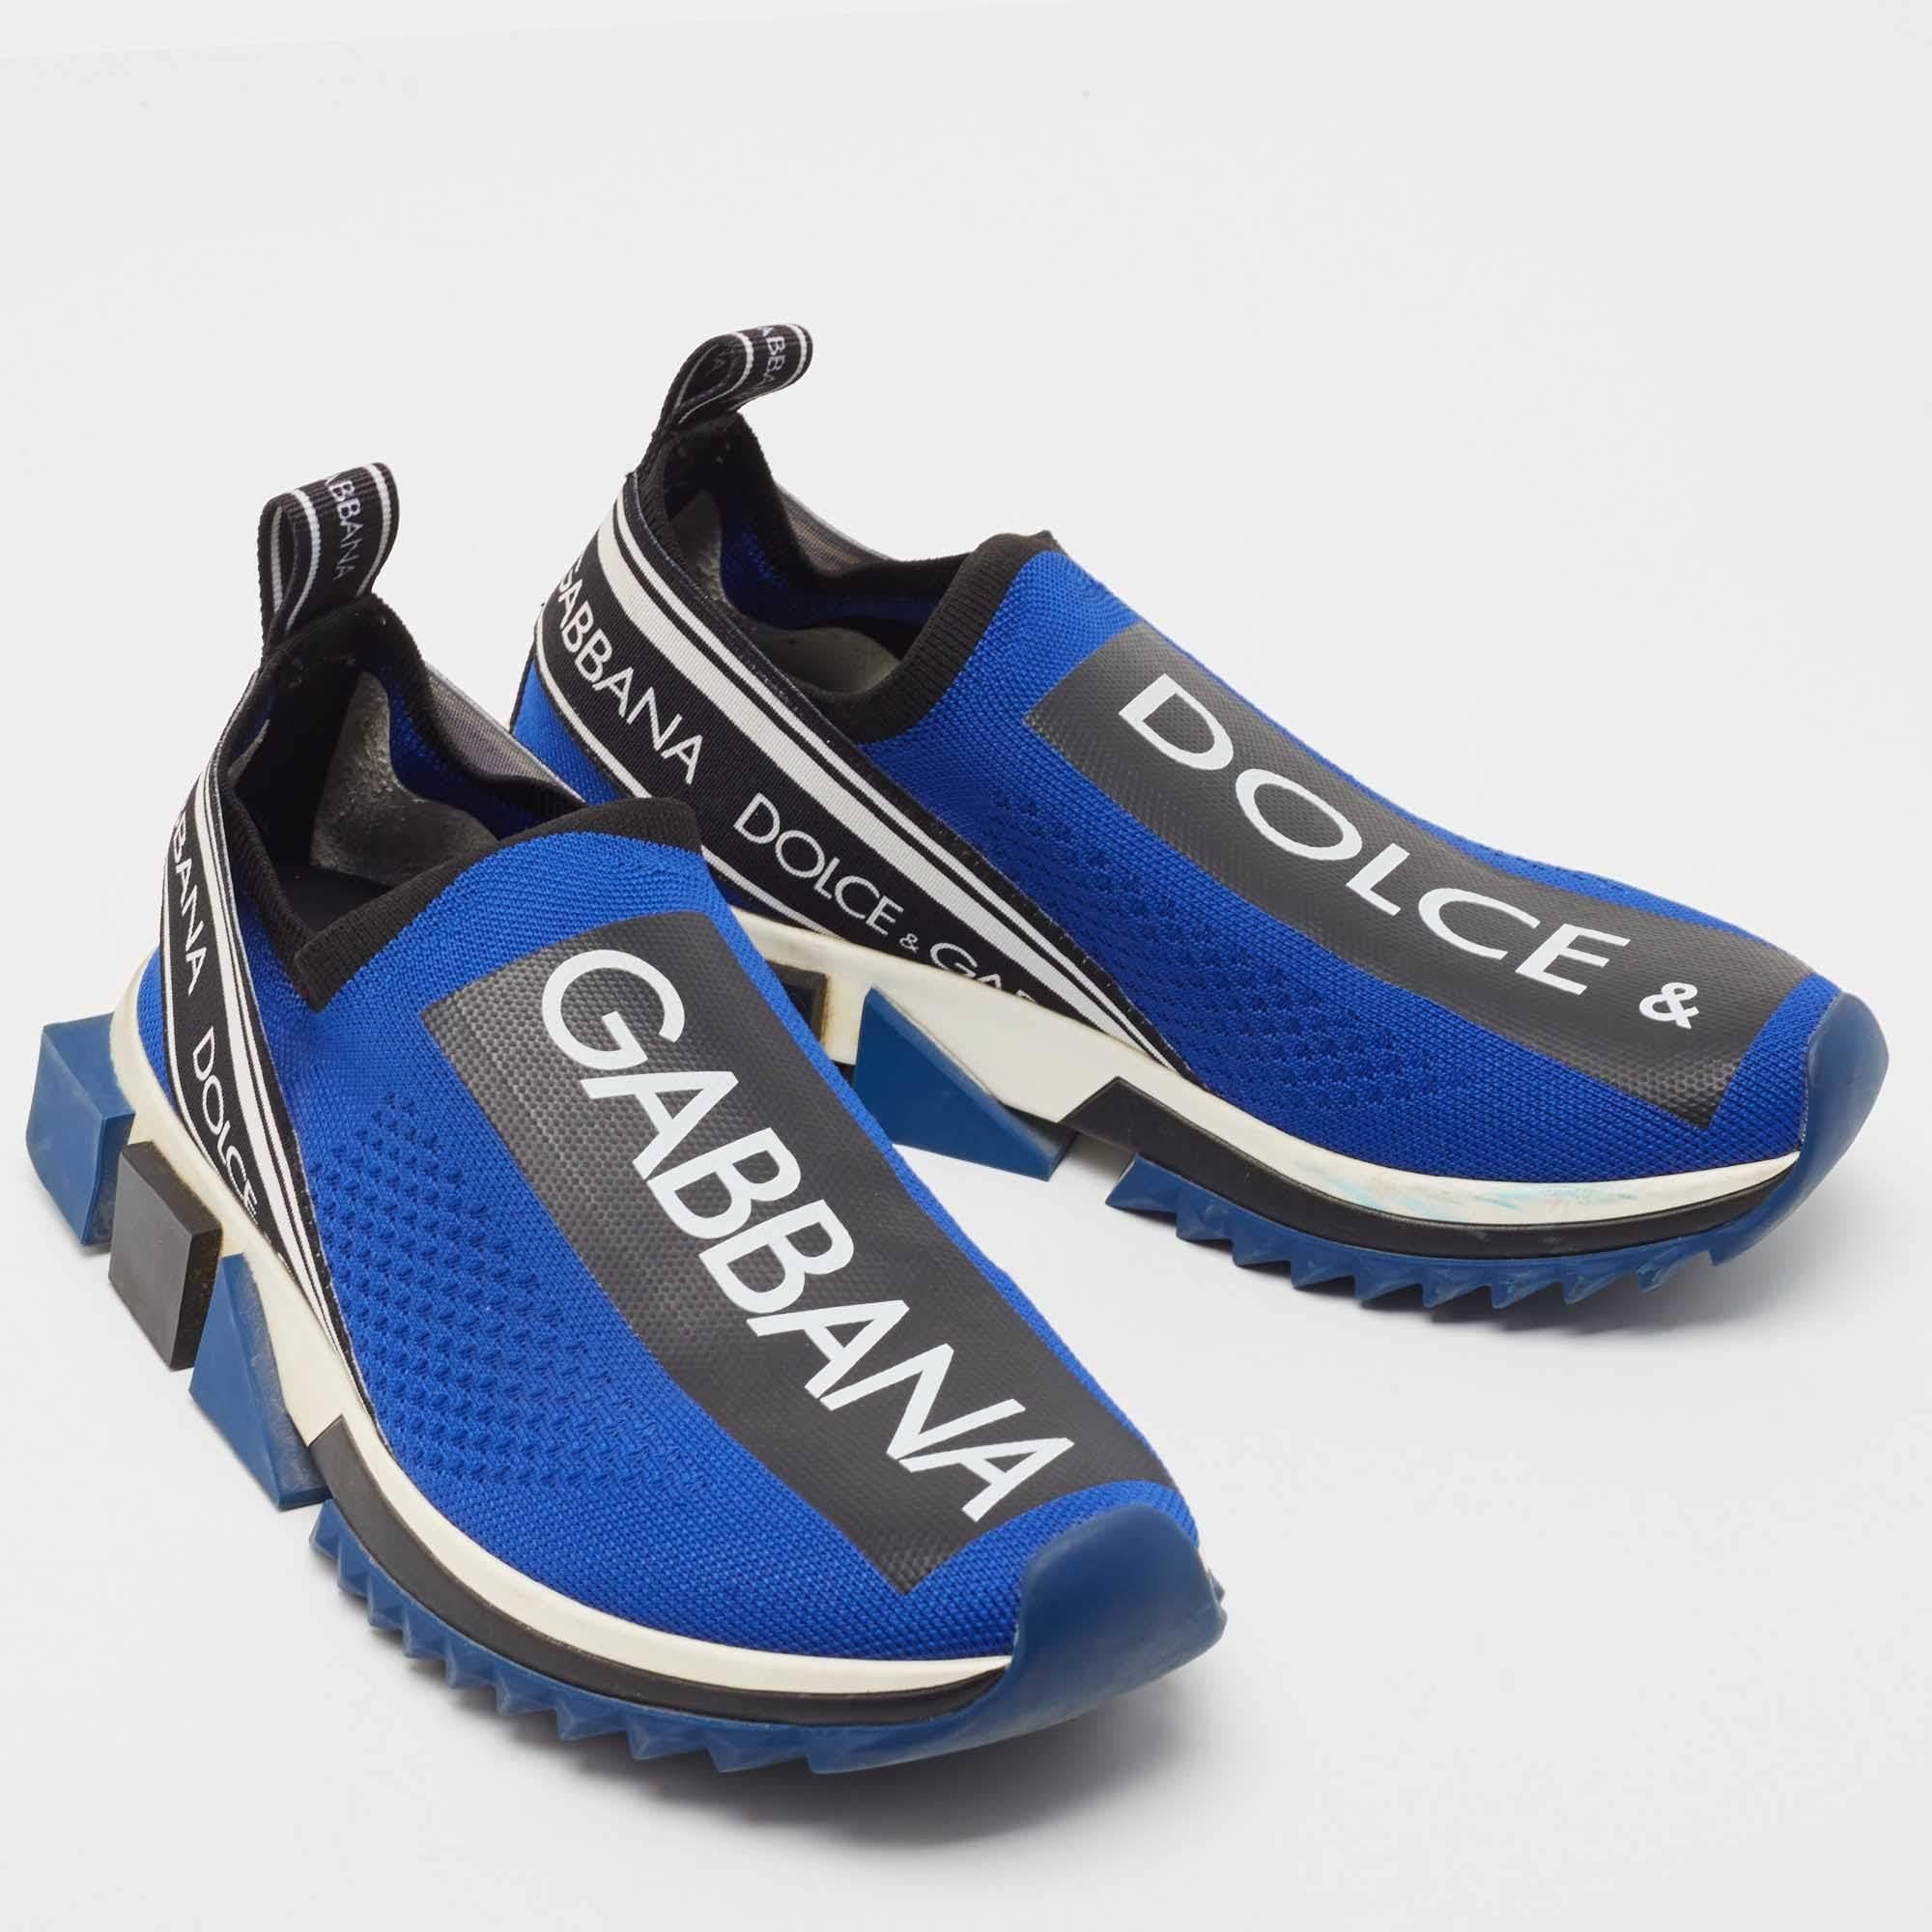 Women's Dolce & Gabbana Blue/Black Knit Fabric Sorrento Sneakers Size 39